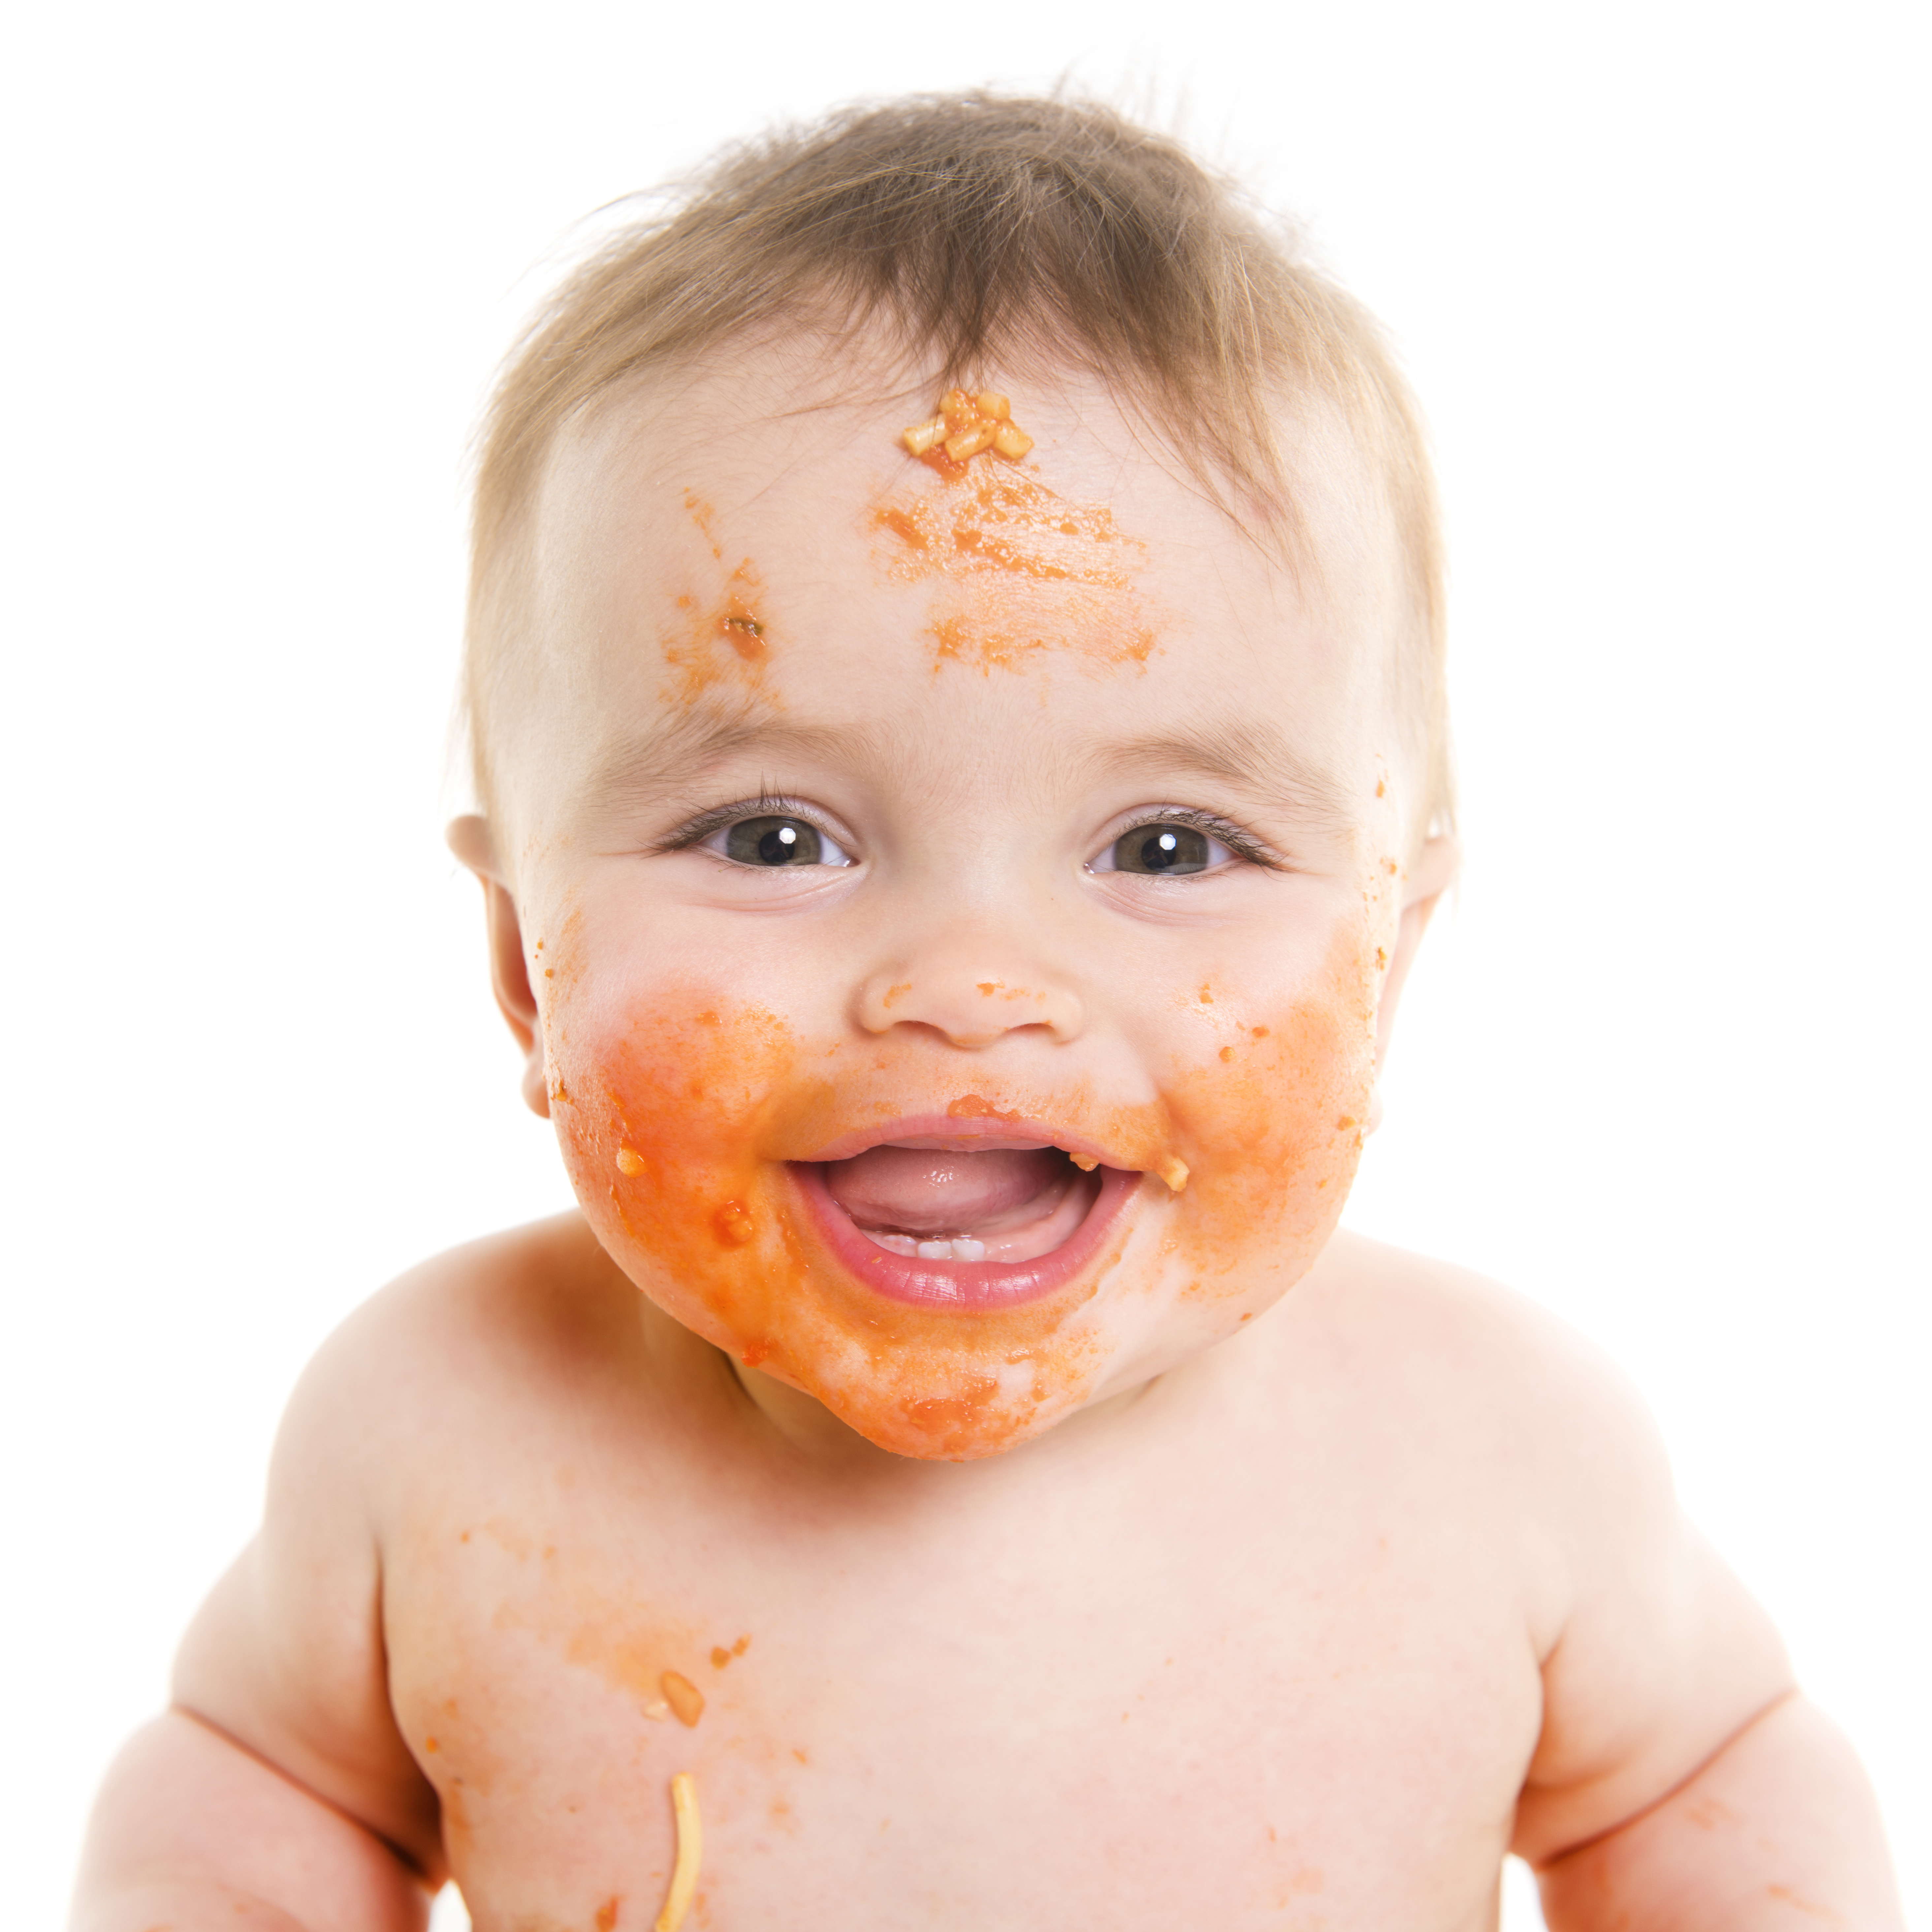 Messy, happy baby eating spaghetti